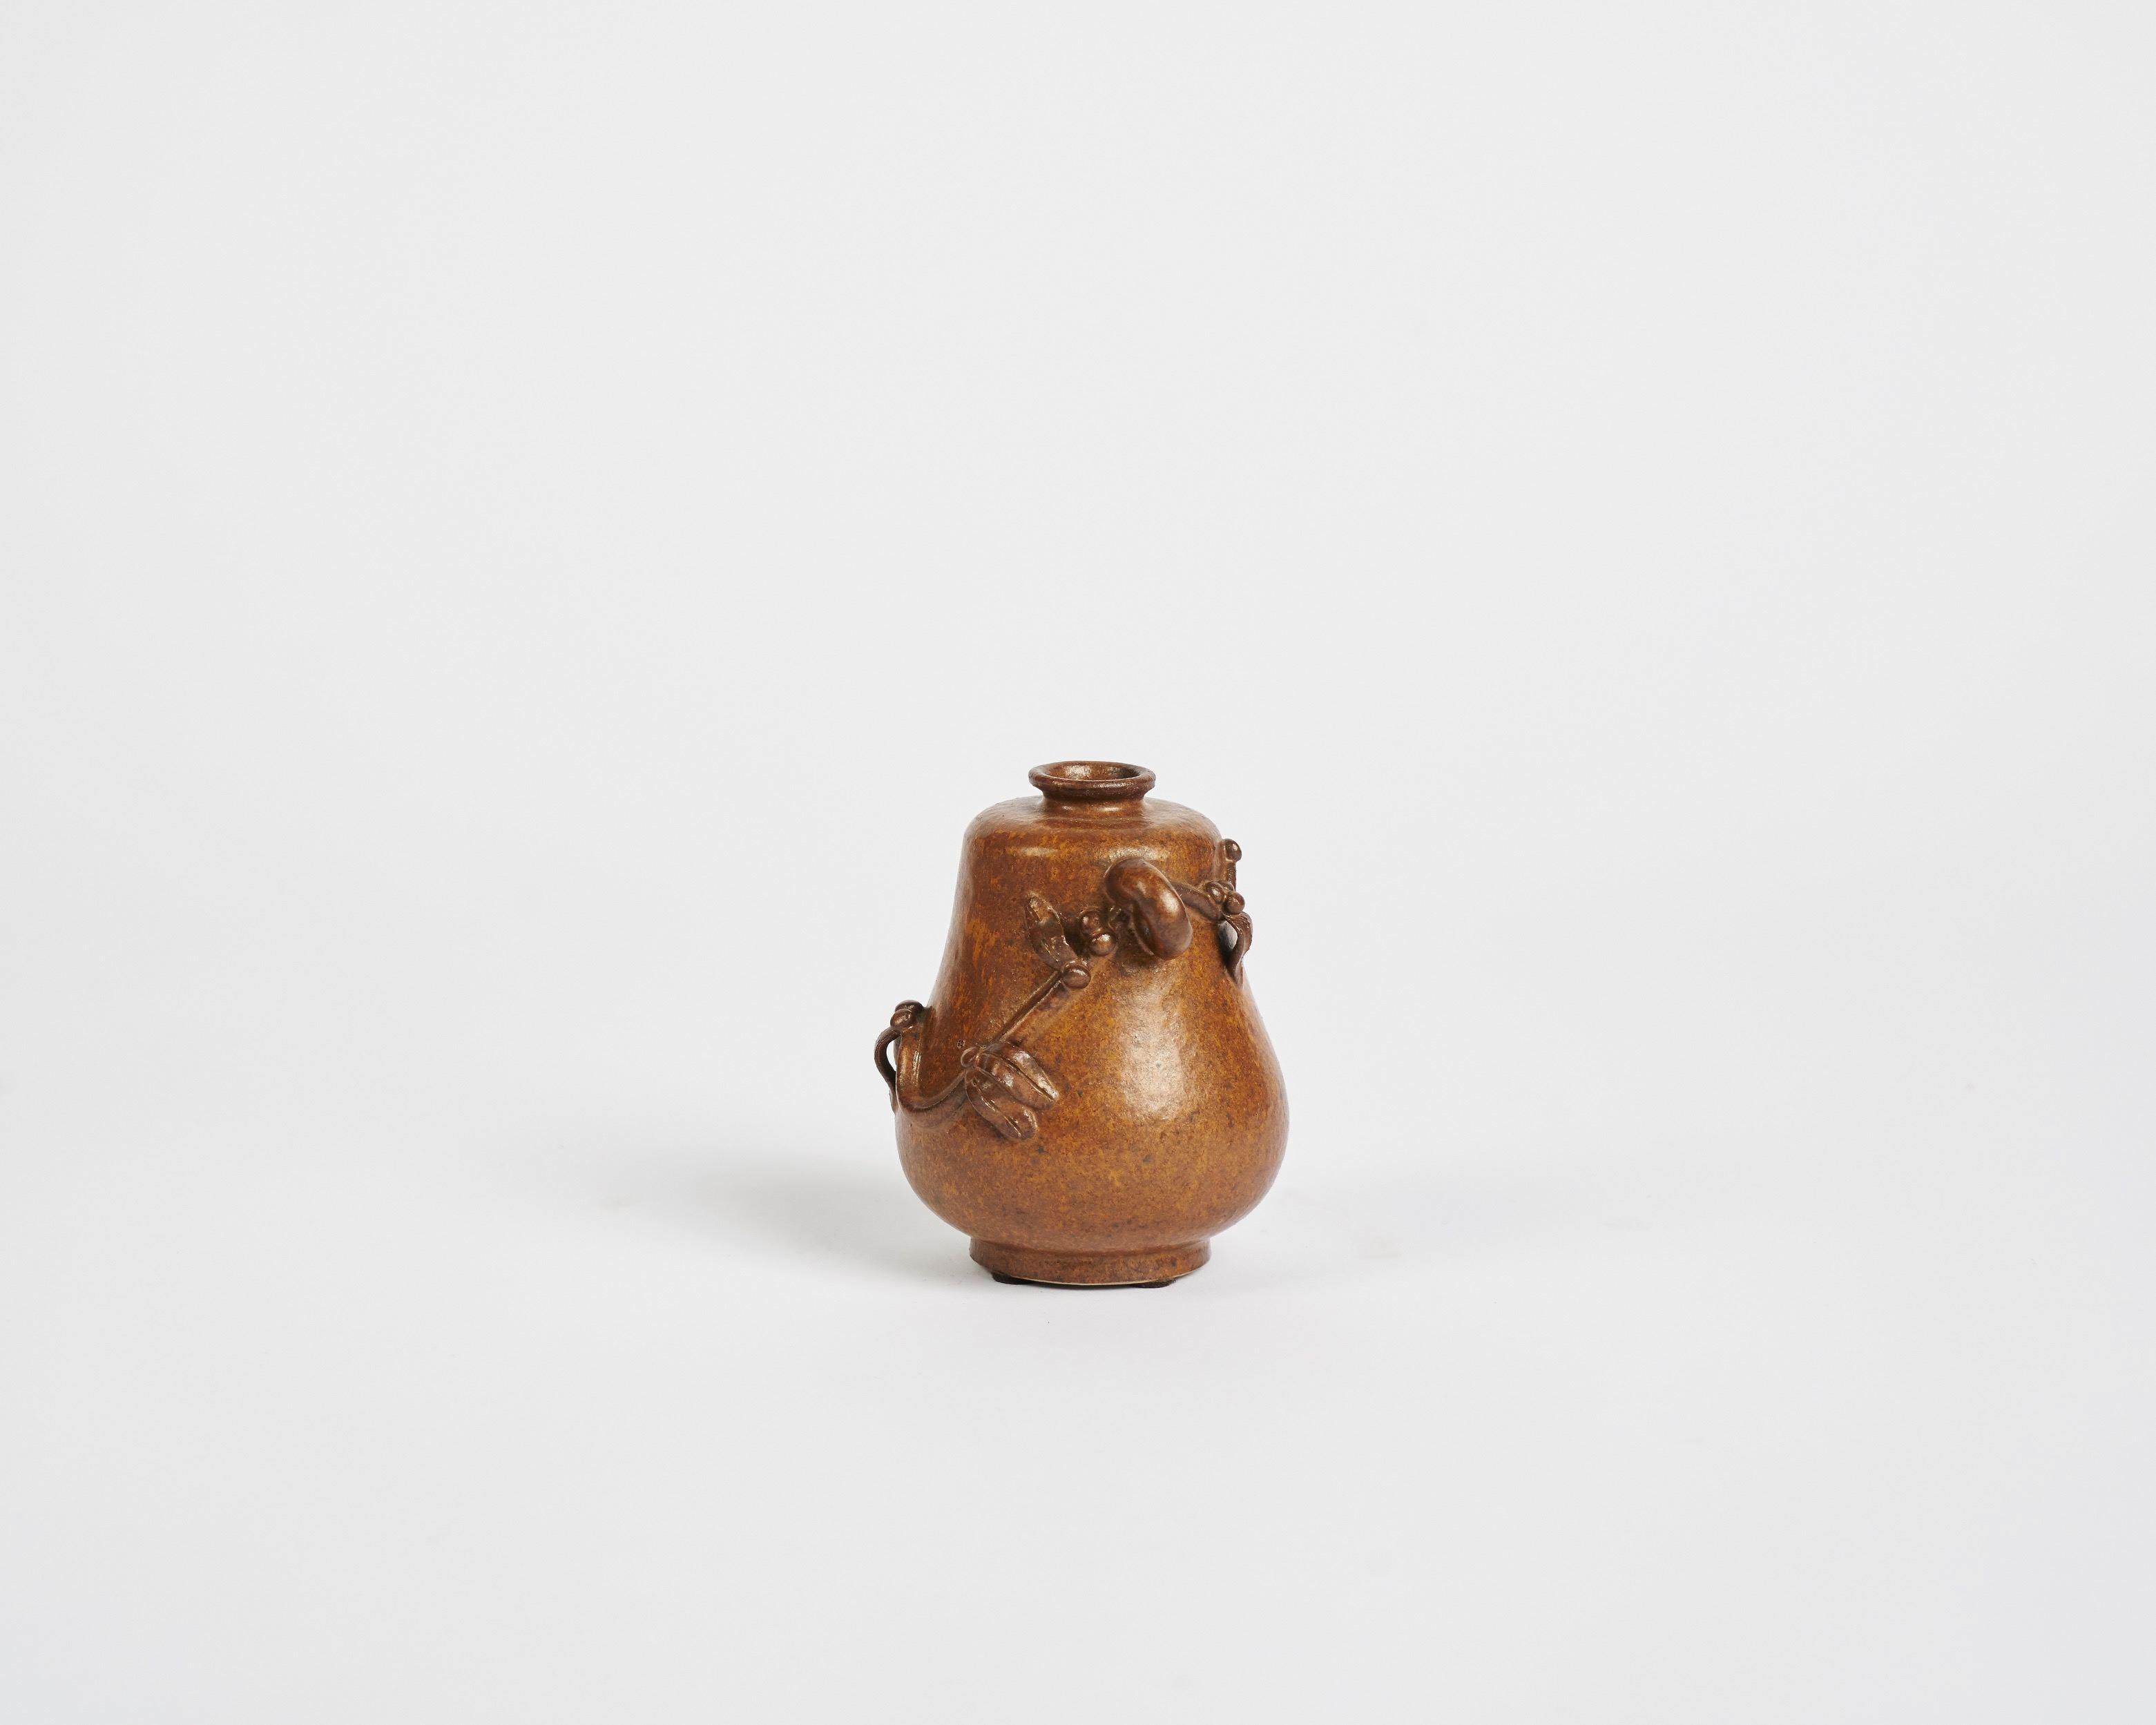 Glazed stoneware vase with vine motif by Arne Bang.

Signed: AB.